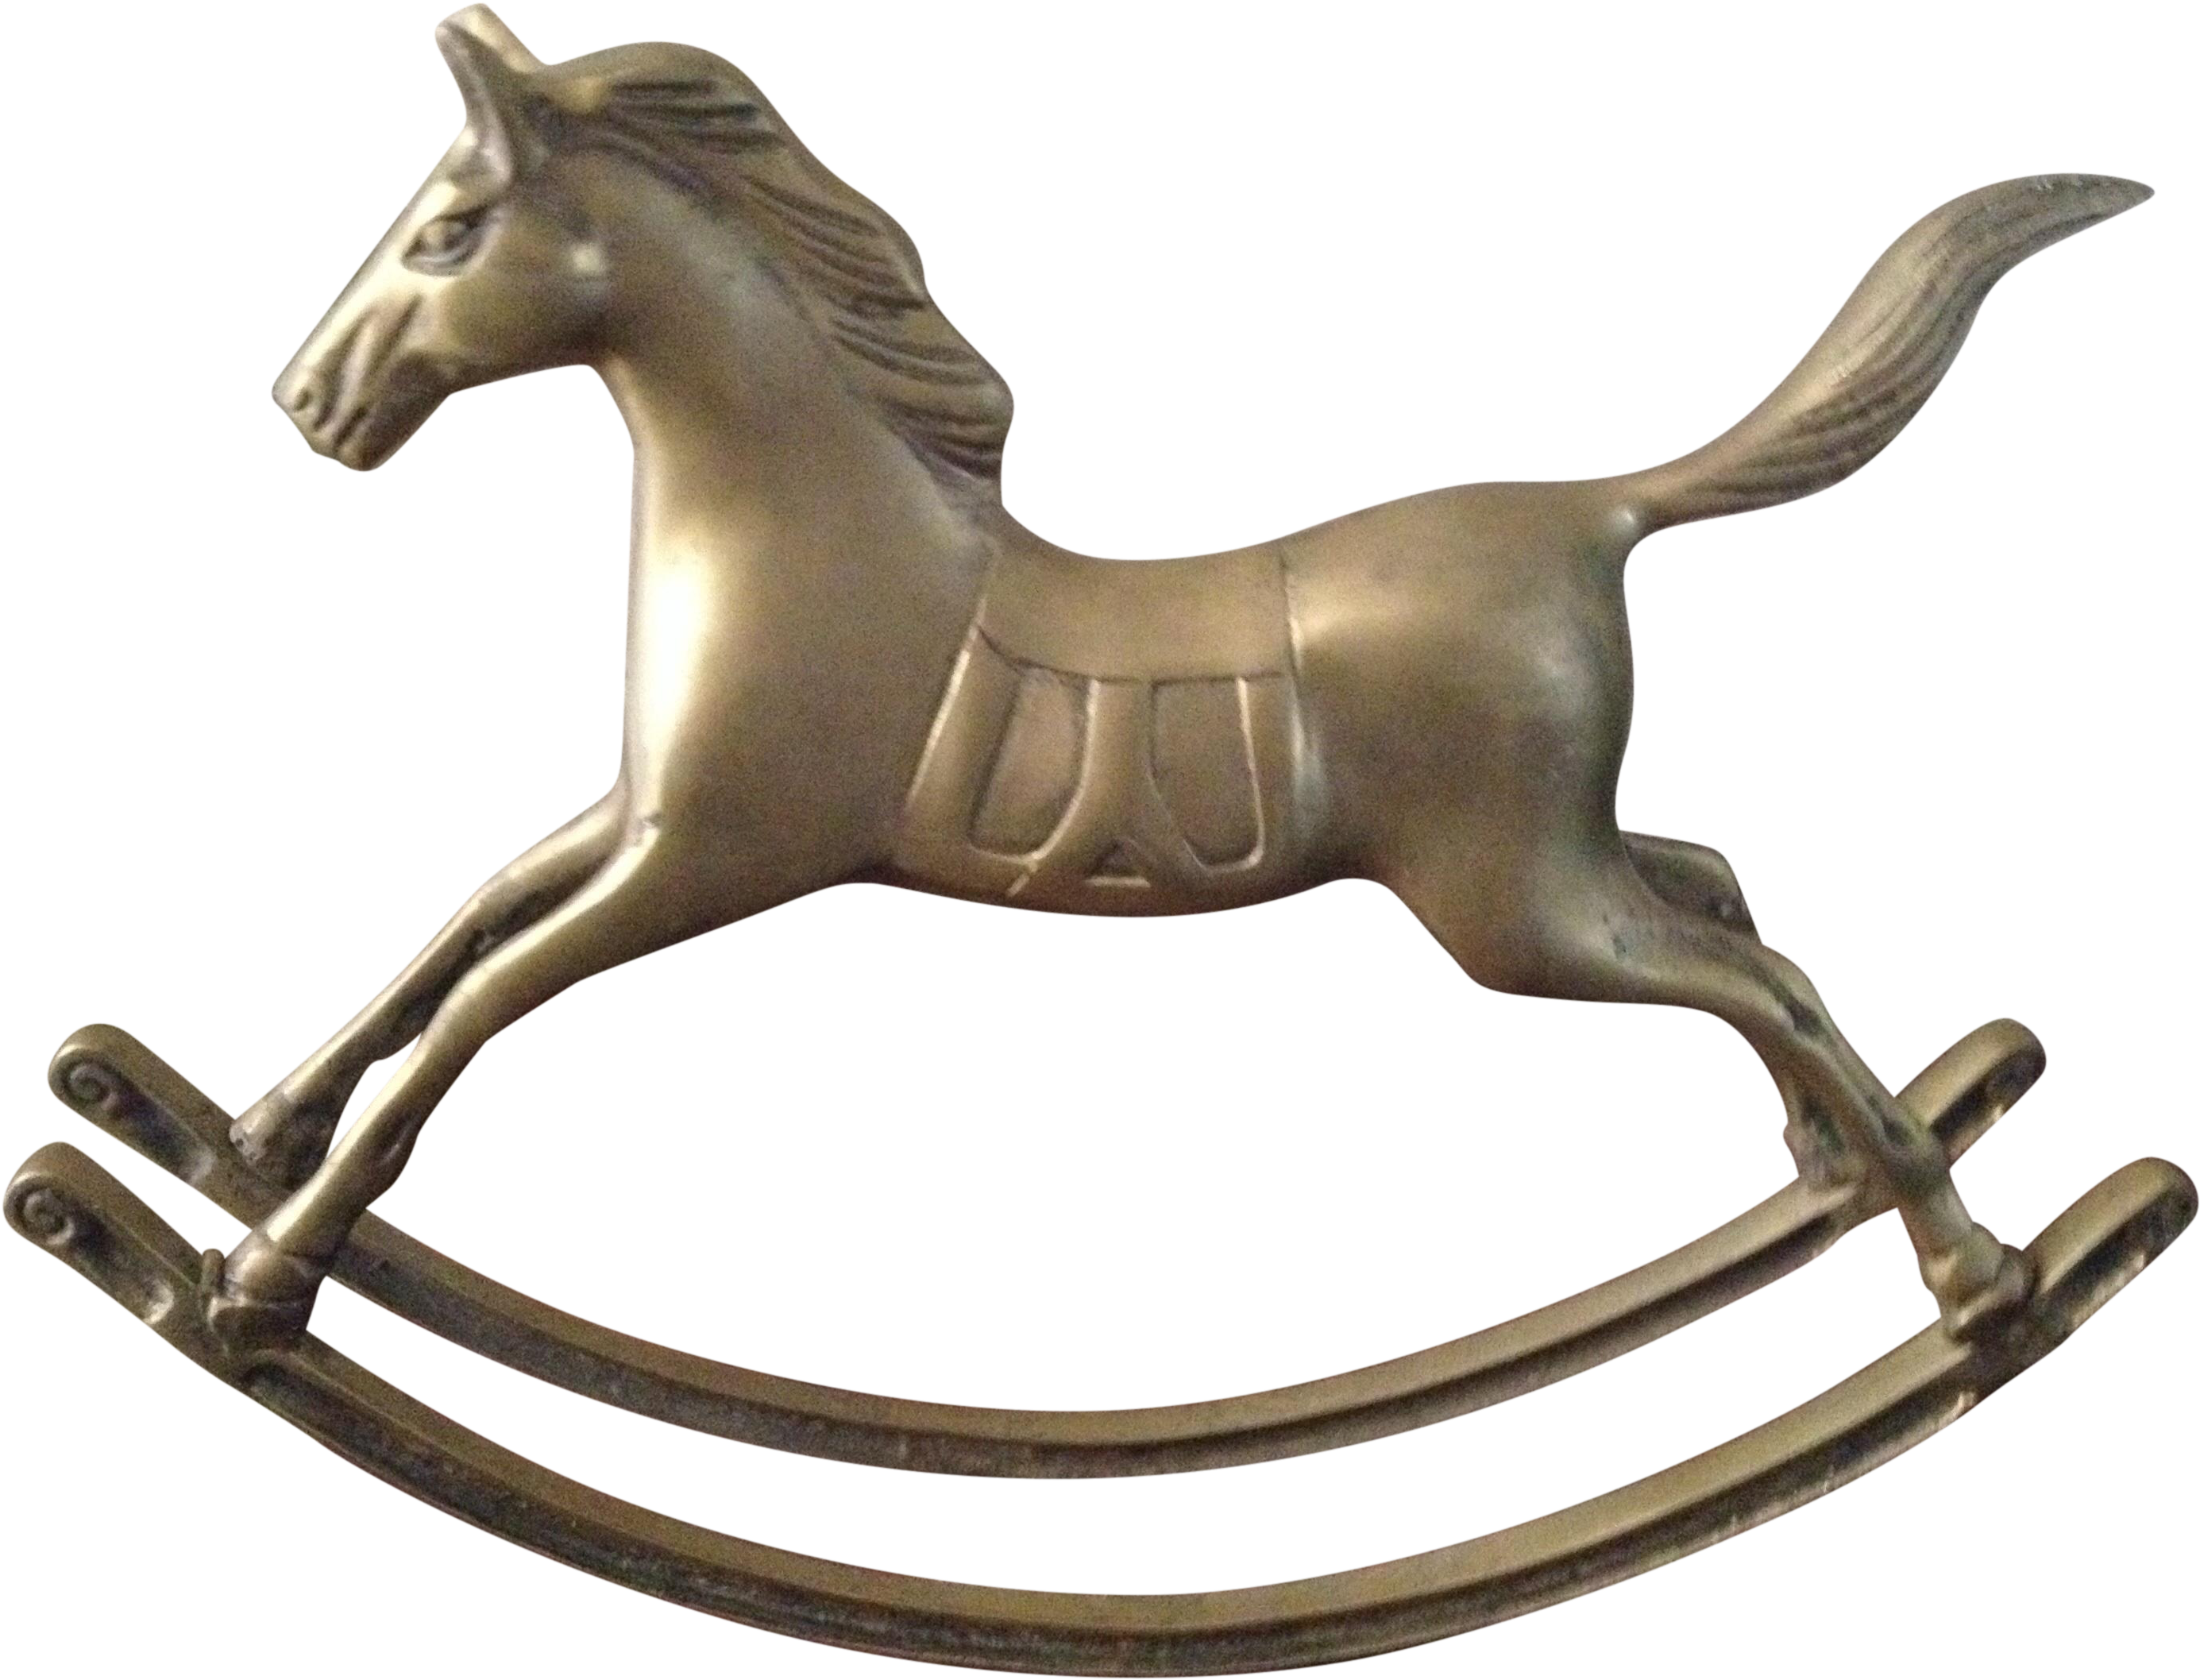 Brass Rocking Horse Vintage Large (3264x2448)